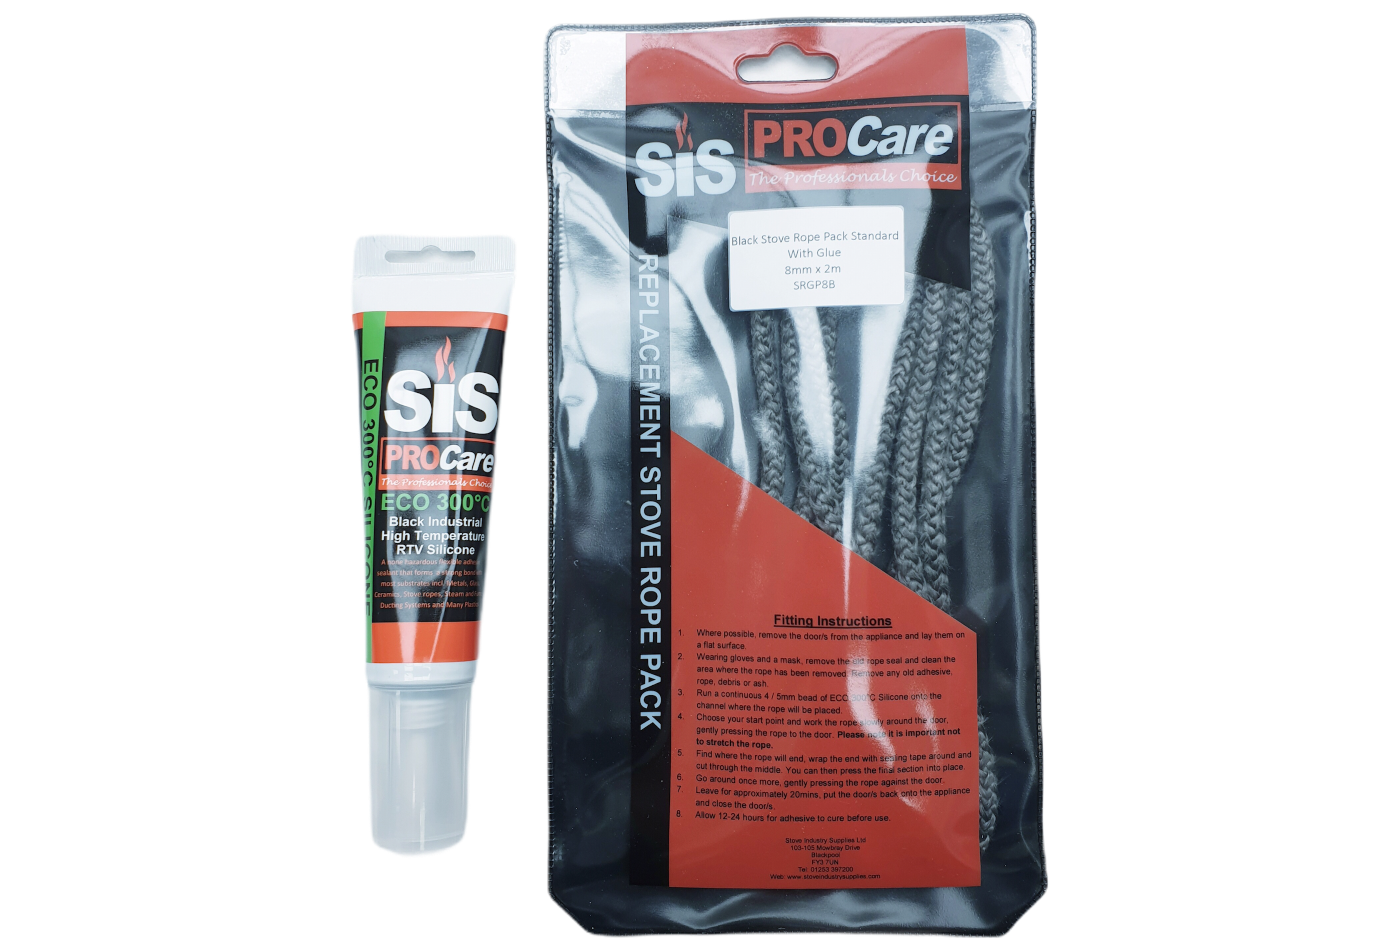 SiS Procare Black 8 milimetre x 2 metre Black Standard Stove Rope & 80 millilitre Rope Glue Pack - product code SRGP8B